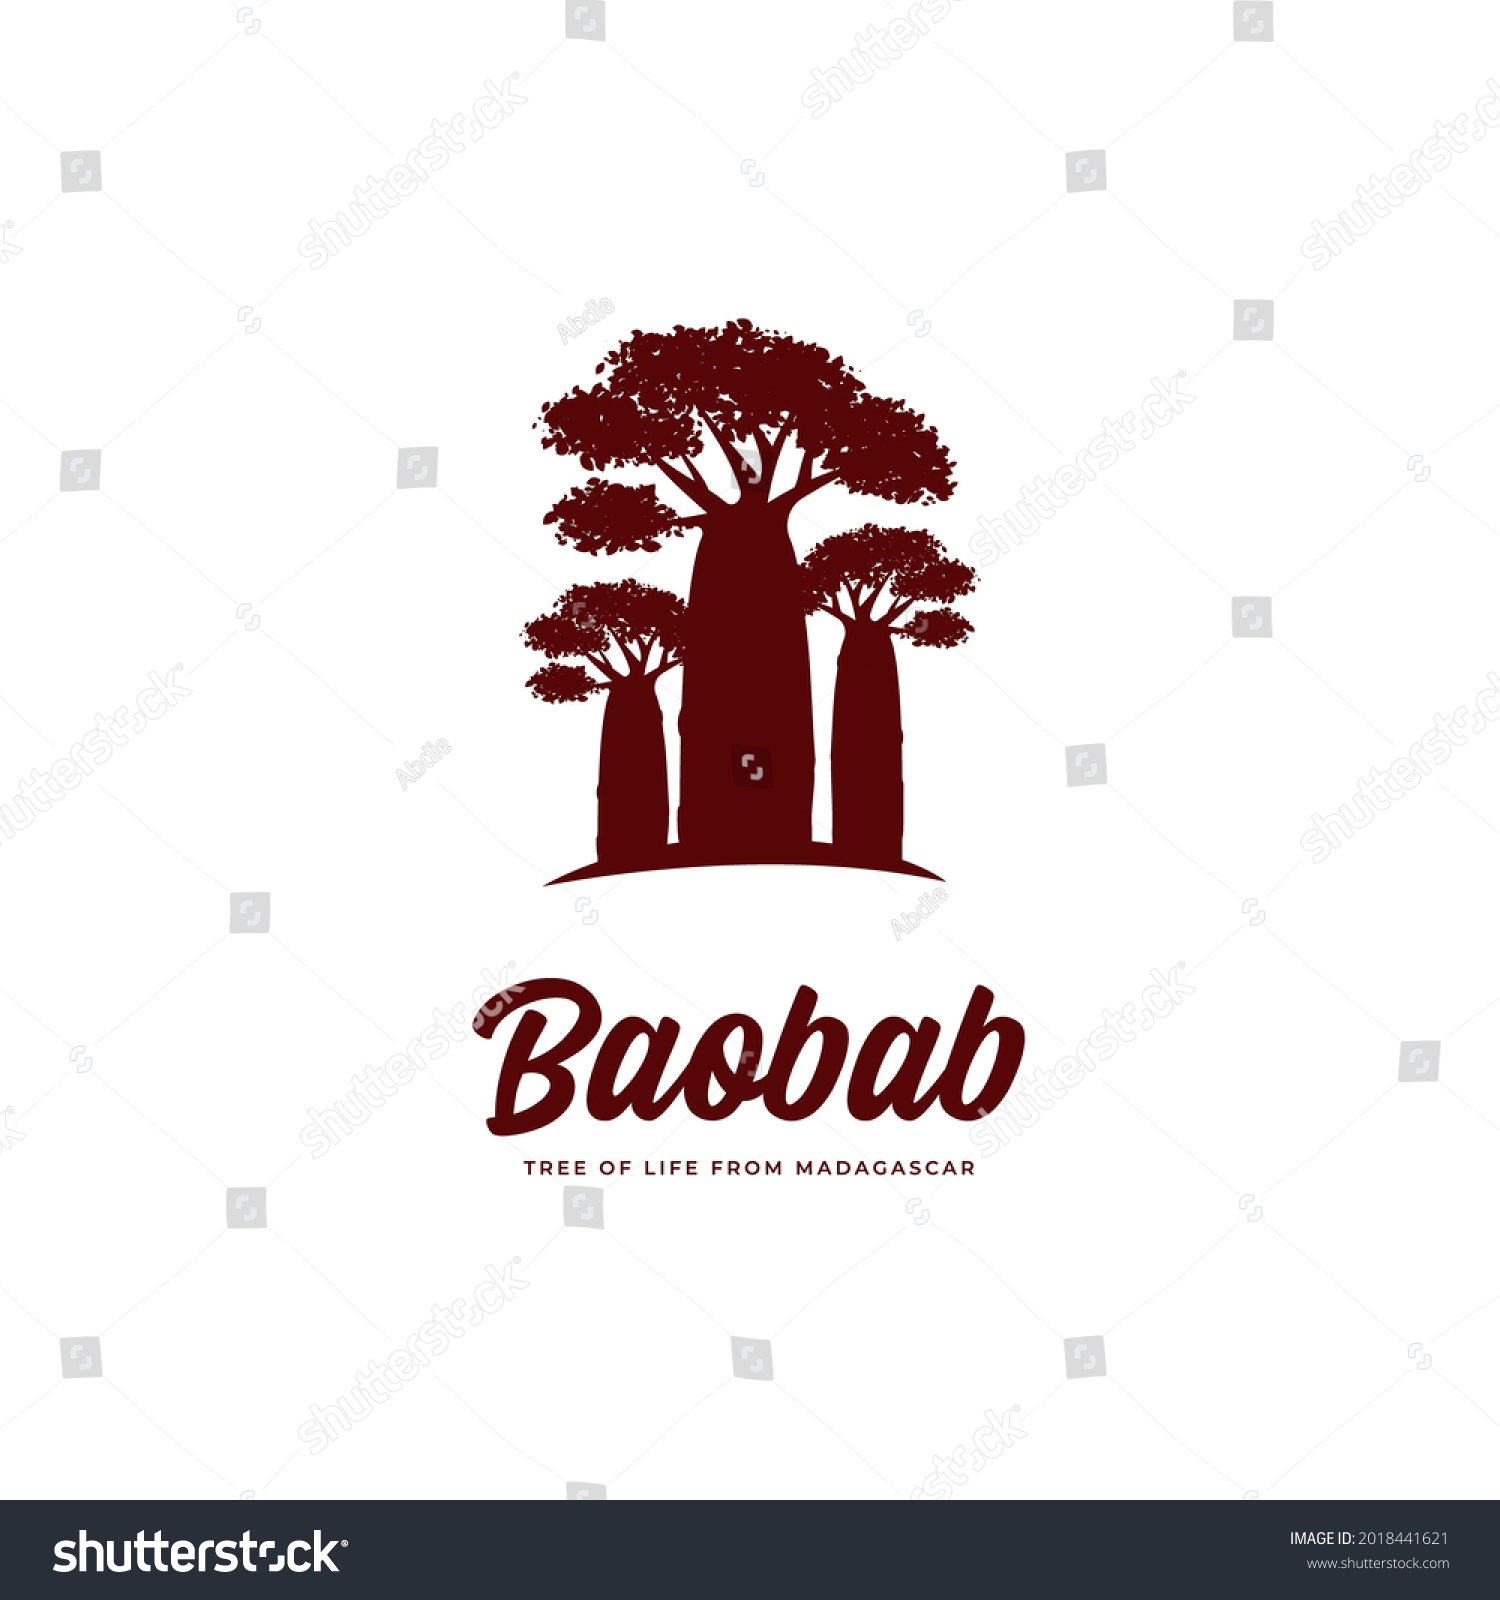 SVG of Baobab tree logo, baobab big tree of life from madagascar logo template svg